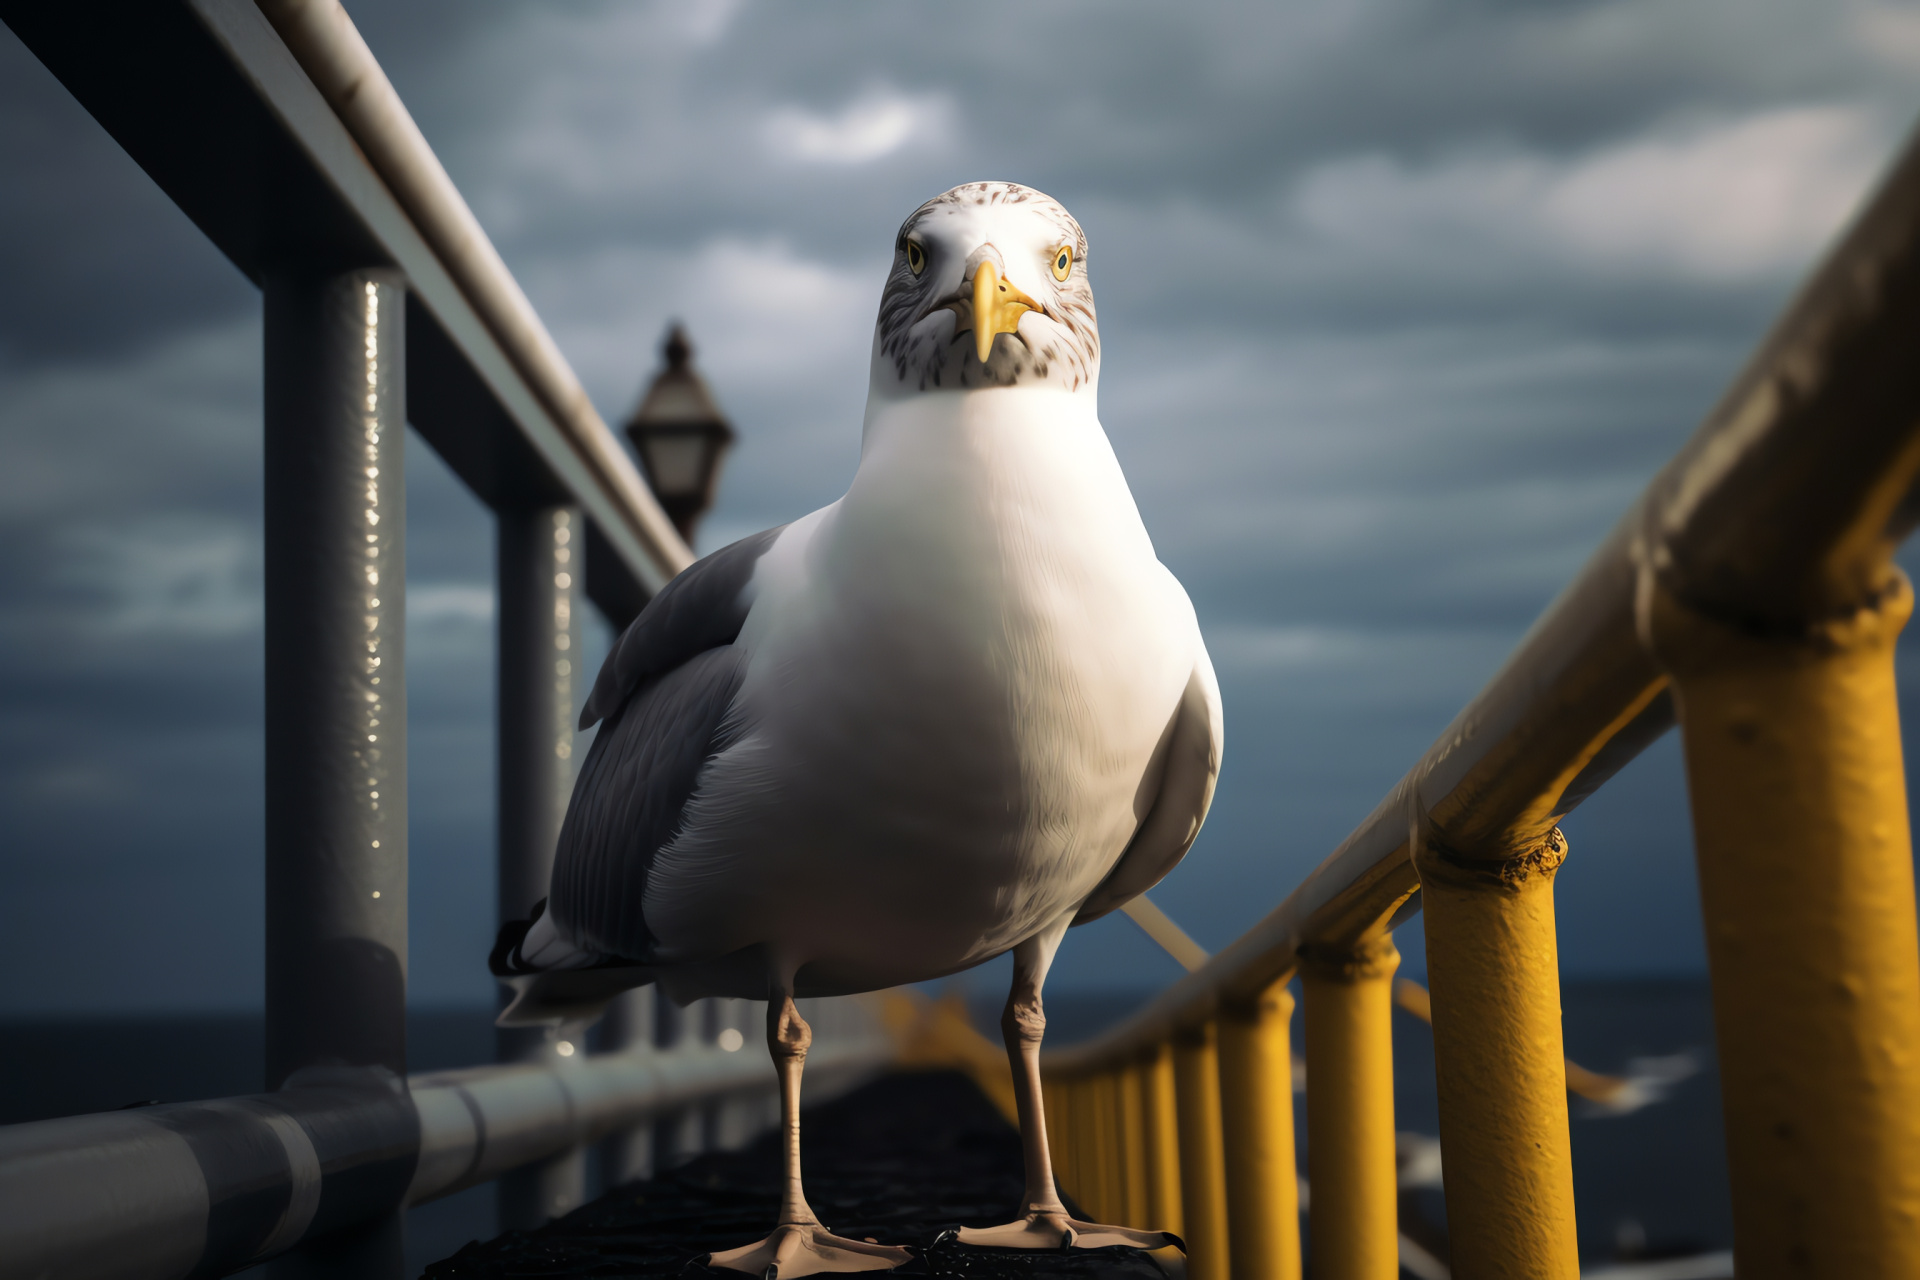 Seagull at lighthouse, coastal weather conditions, avian survivor, bird against storm background, sea navigation symbol, HD Desktop Image